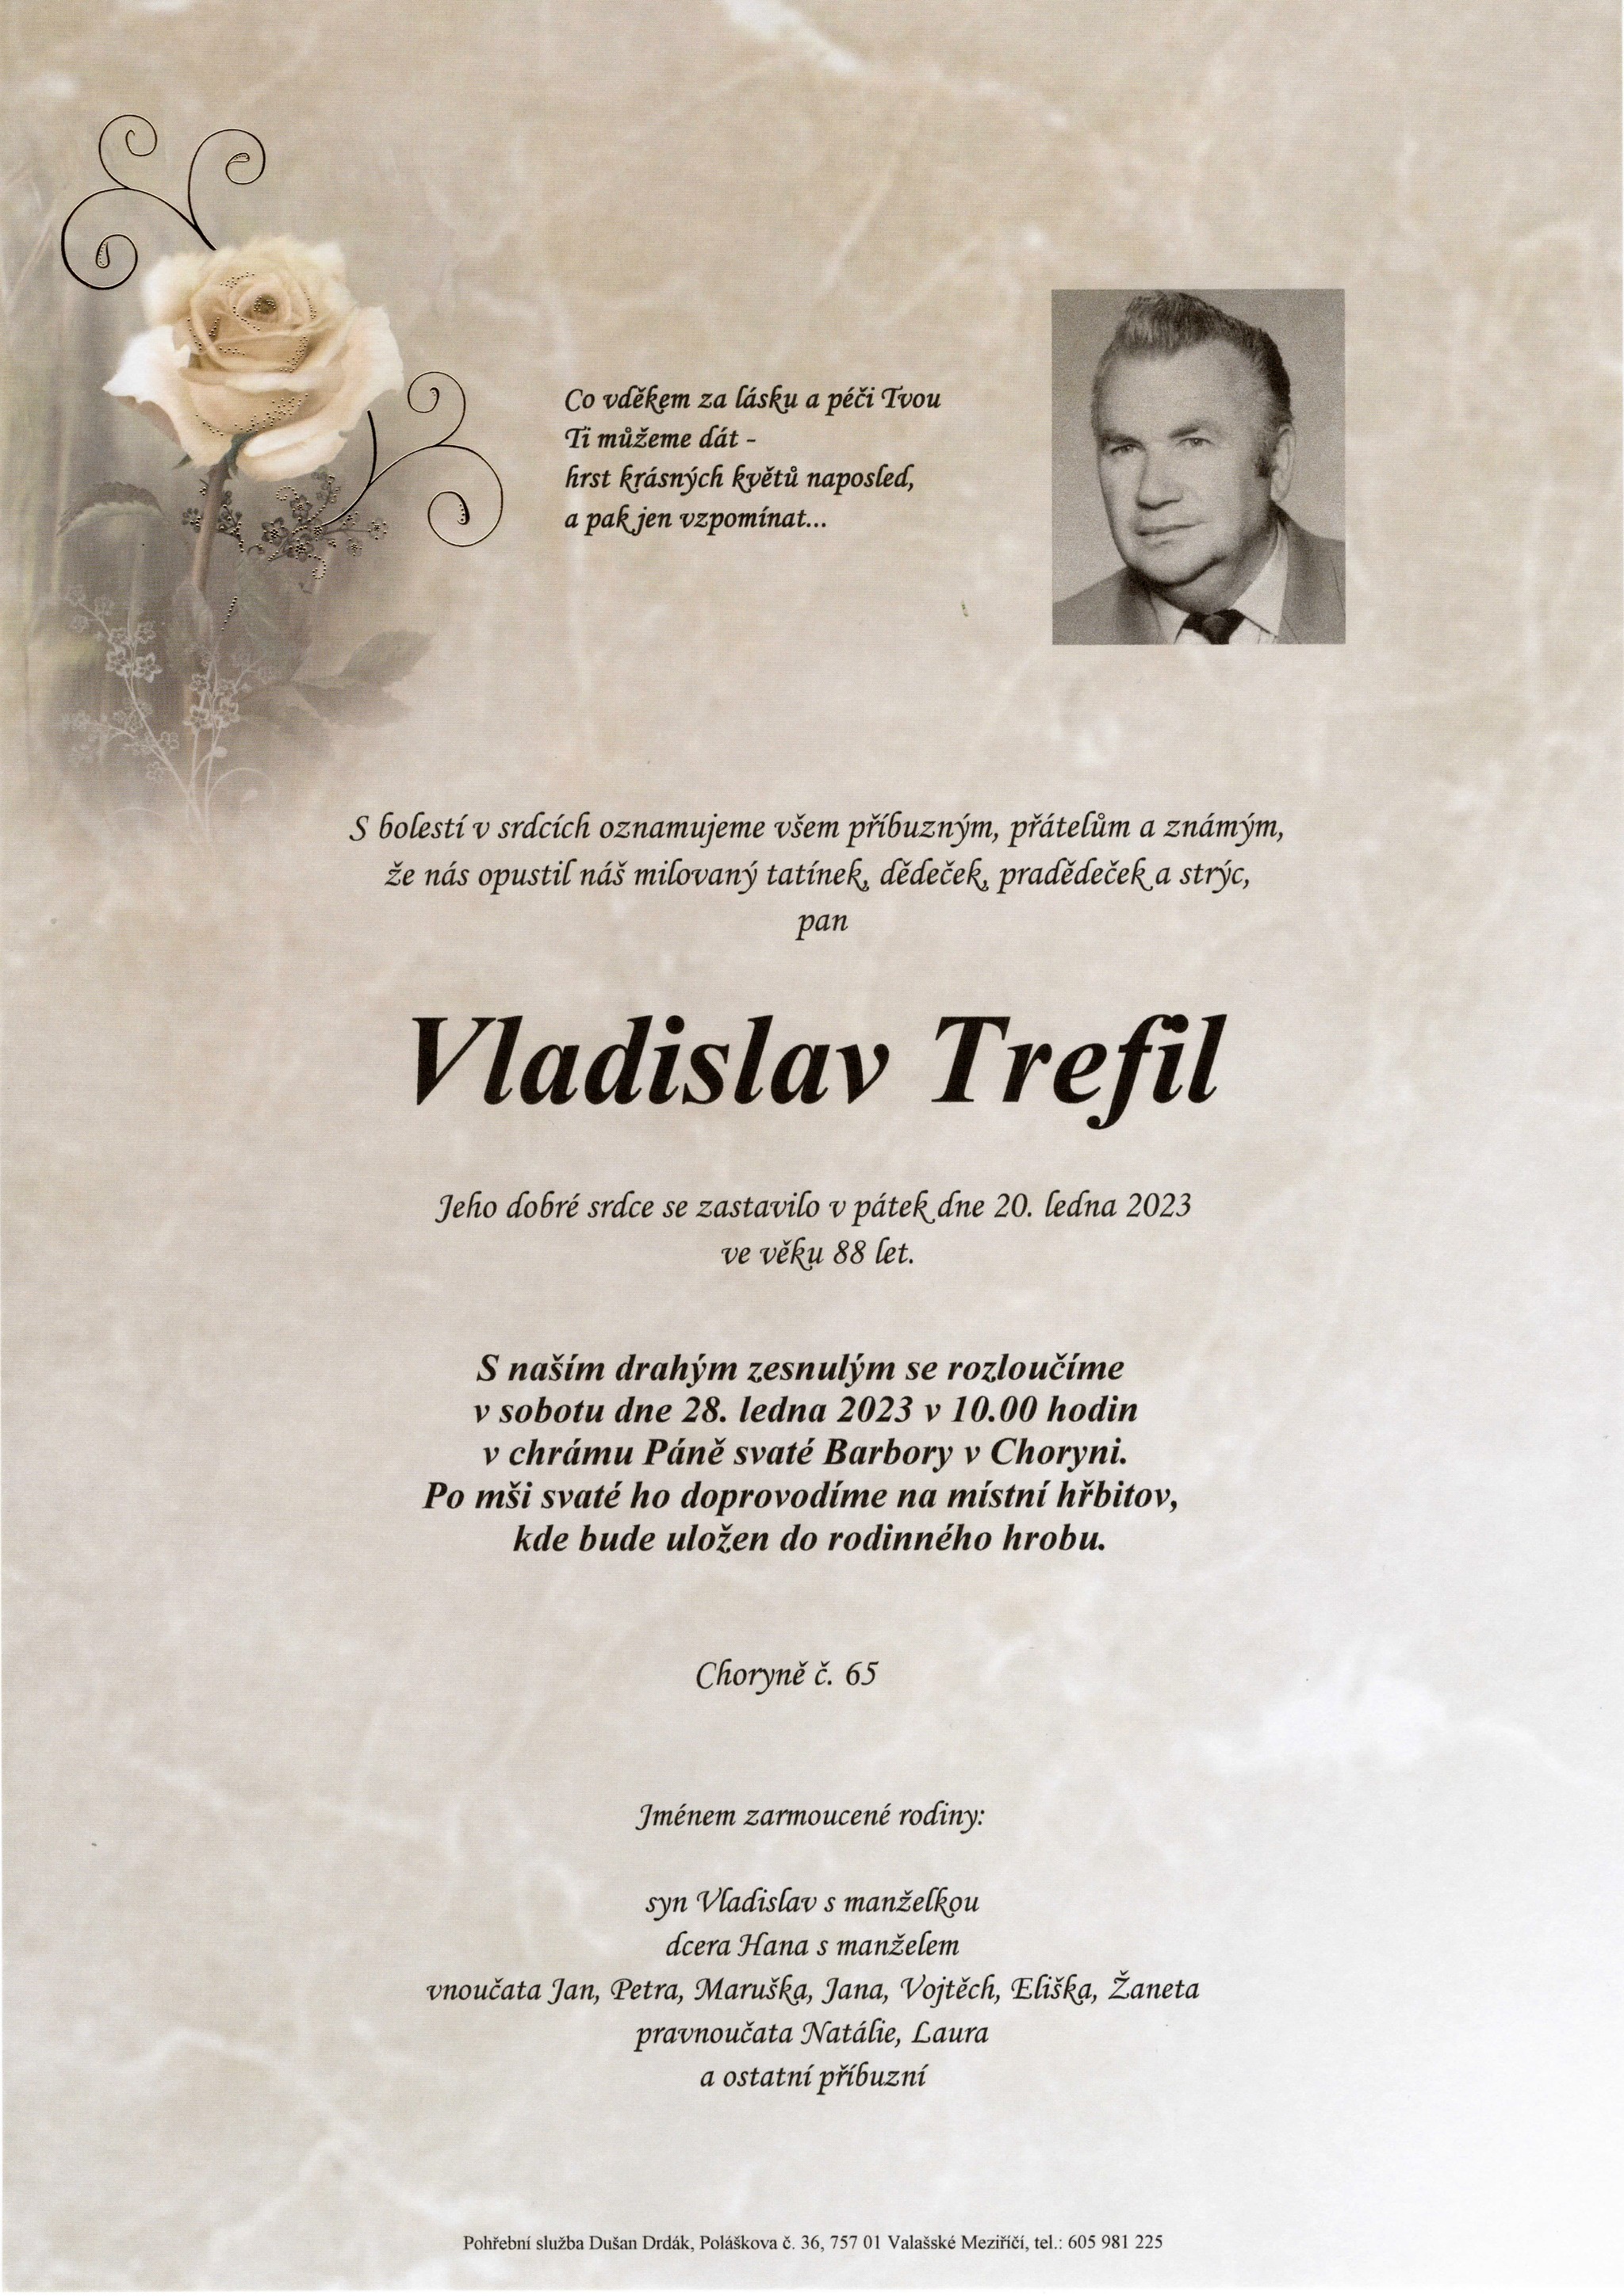 Vladislav Trefil